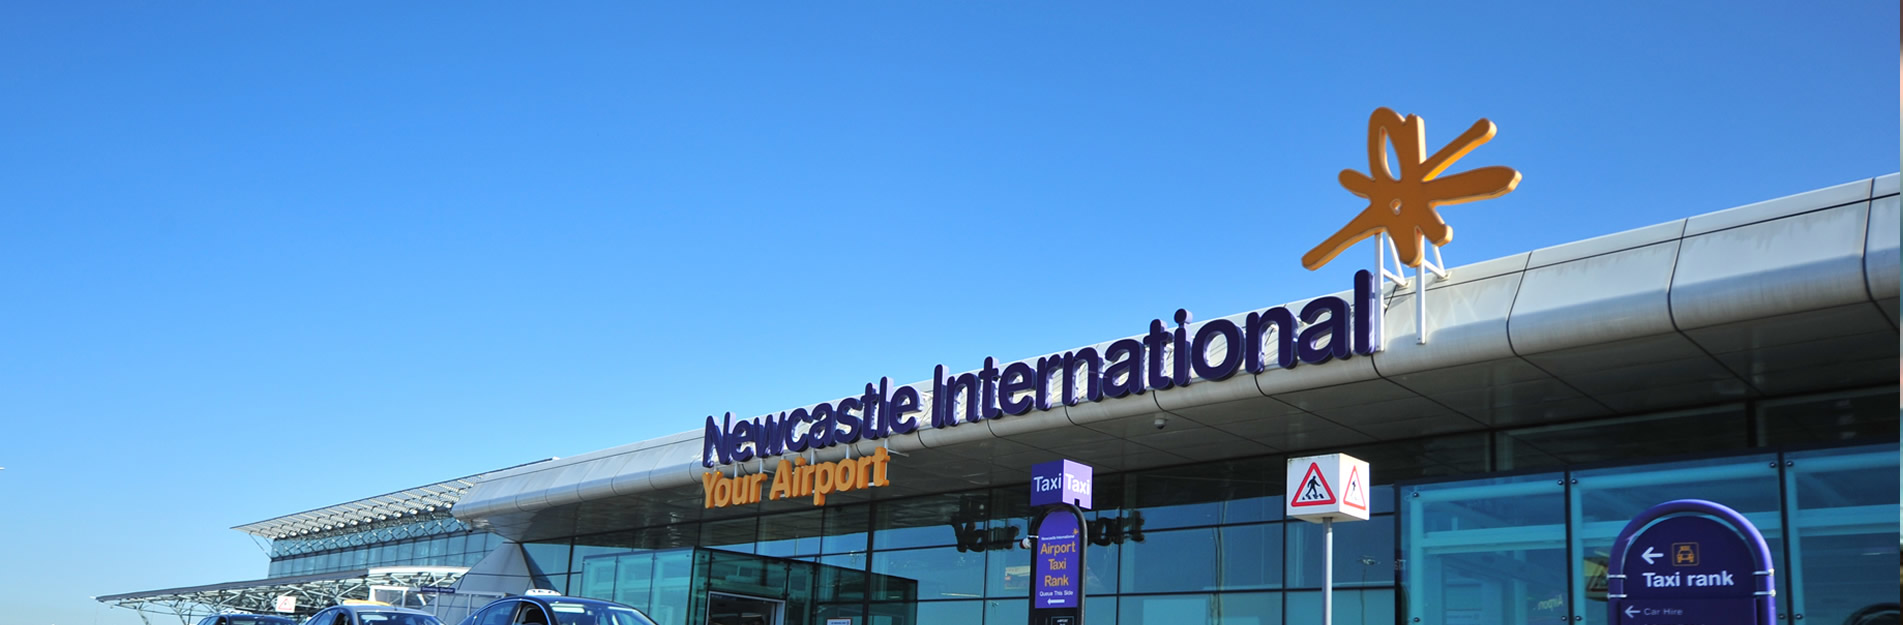 Eastern Airways increases flights to Aberdeen from Newcastle International Airport